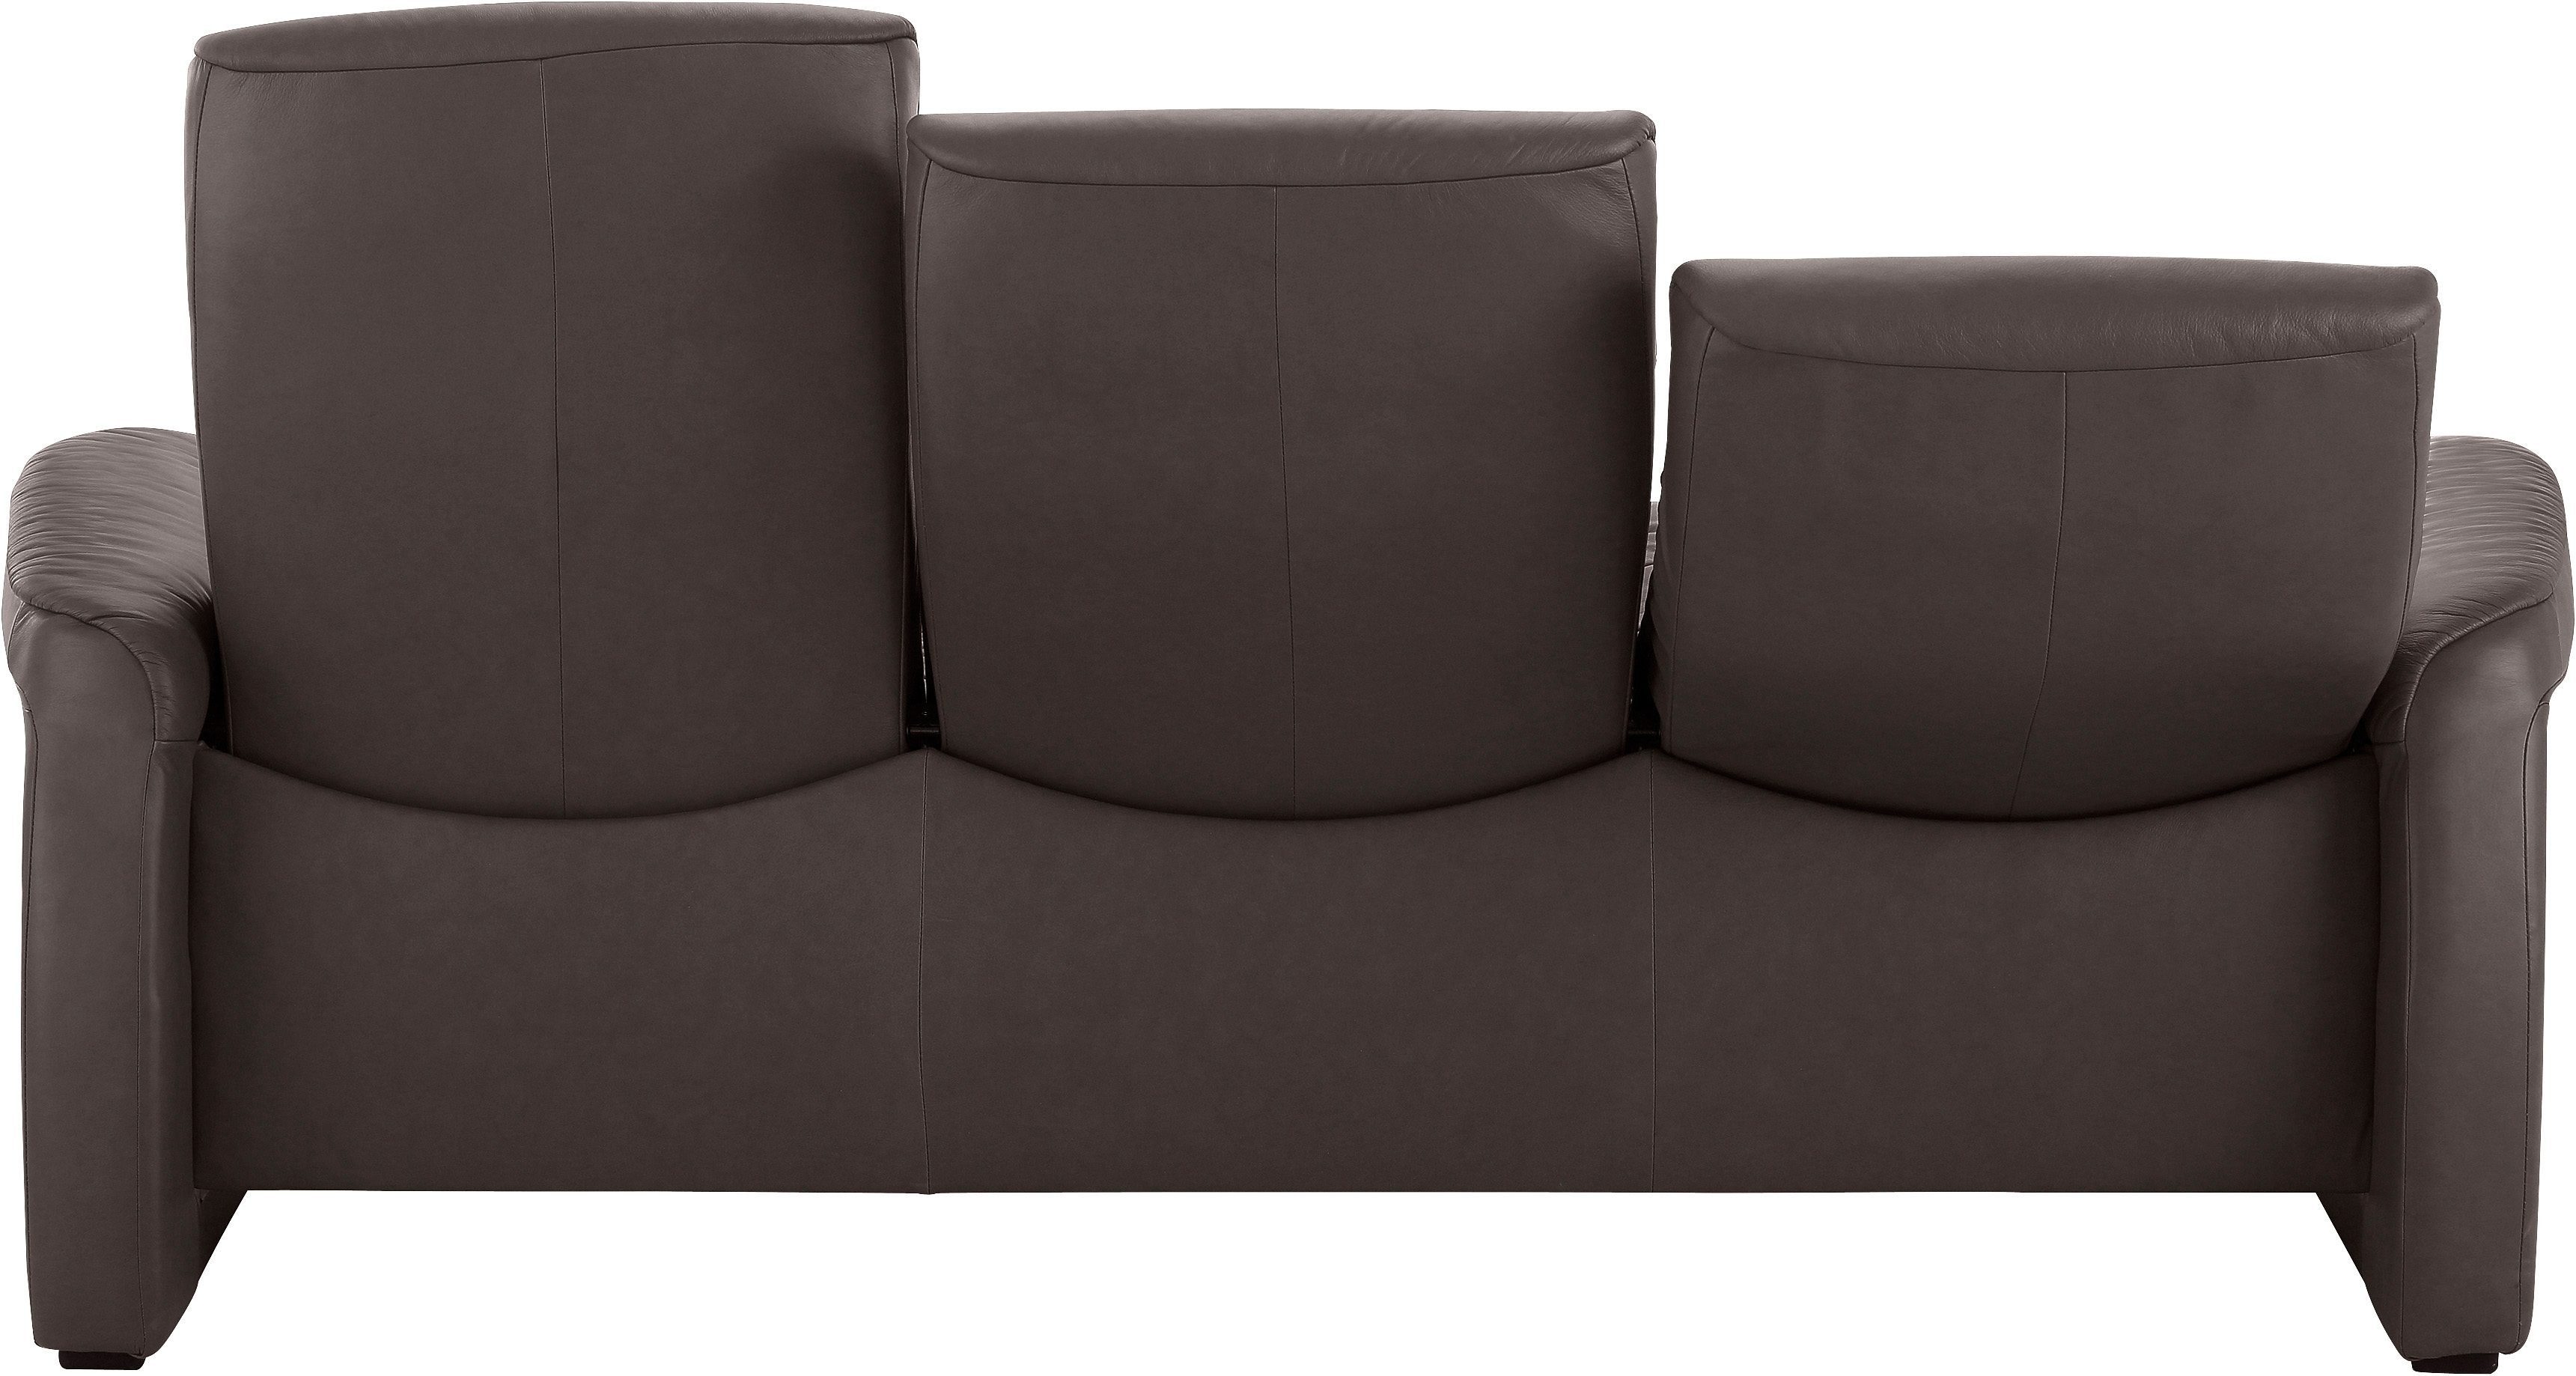 & 209 Breite Back, inklusive Rückenverstellung, cm Relaxfunktion Stressless® 3-Sitzer PALOMA chocolate Sapphire, High